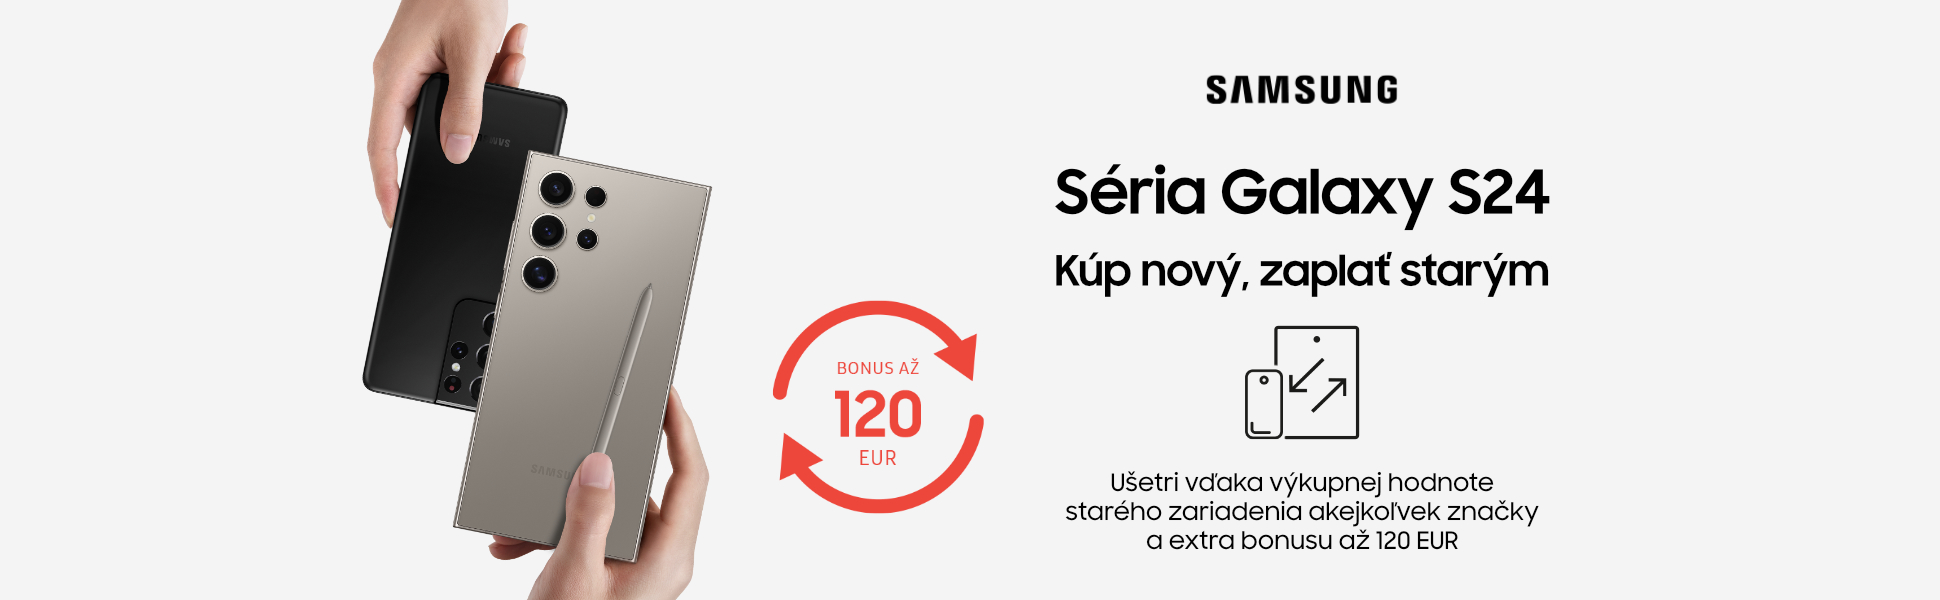 Samsung Galaxy S24, bonus az 120Eur - kategoria